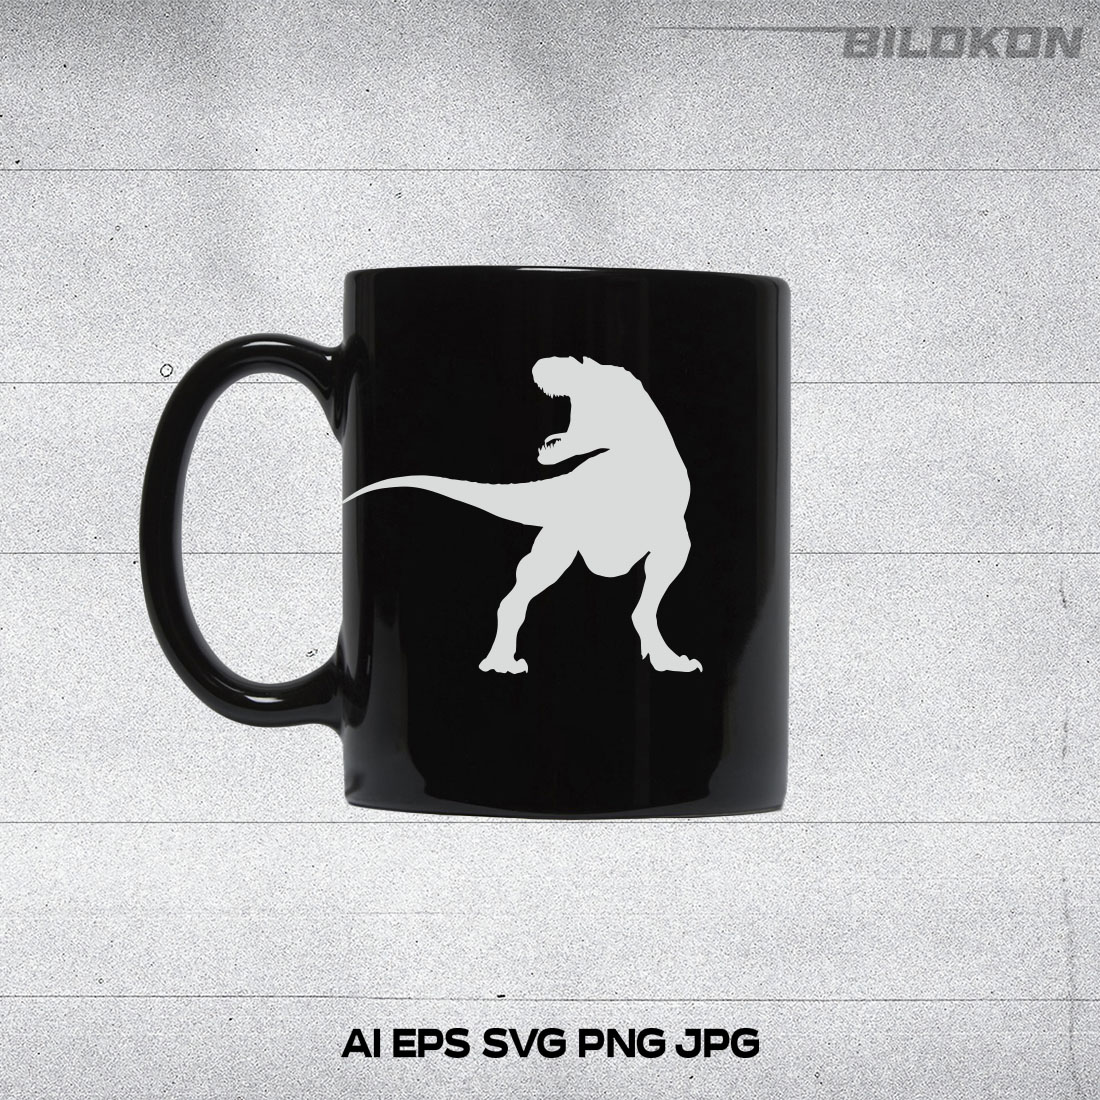 Black coffee mug with a white dinosaur on it.